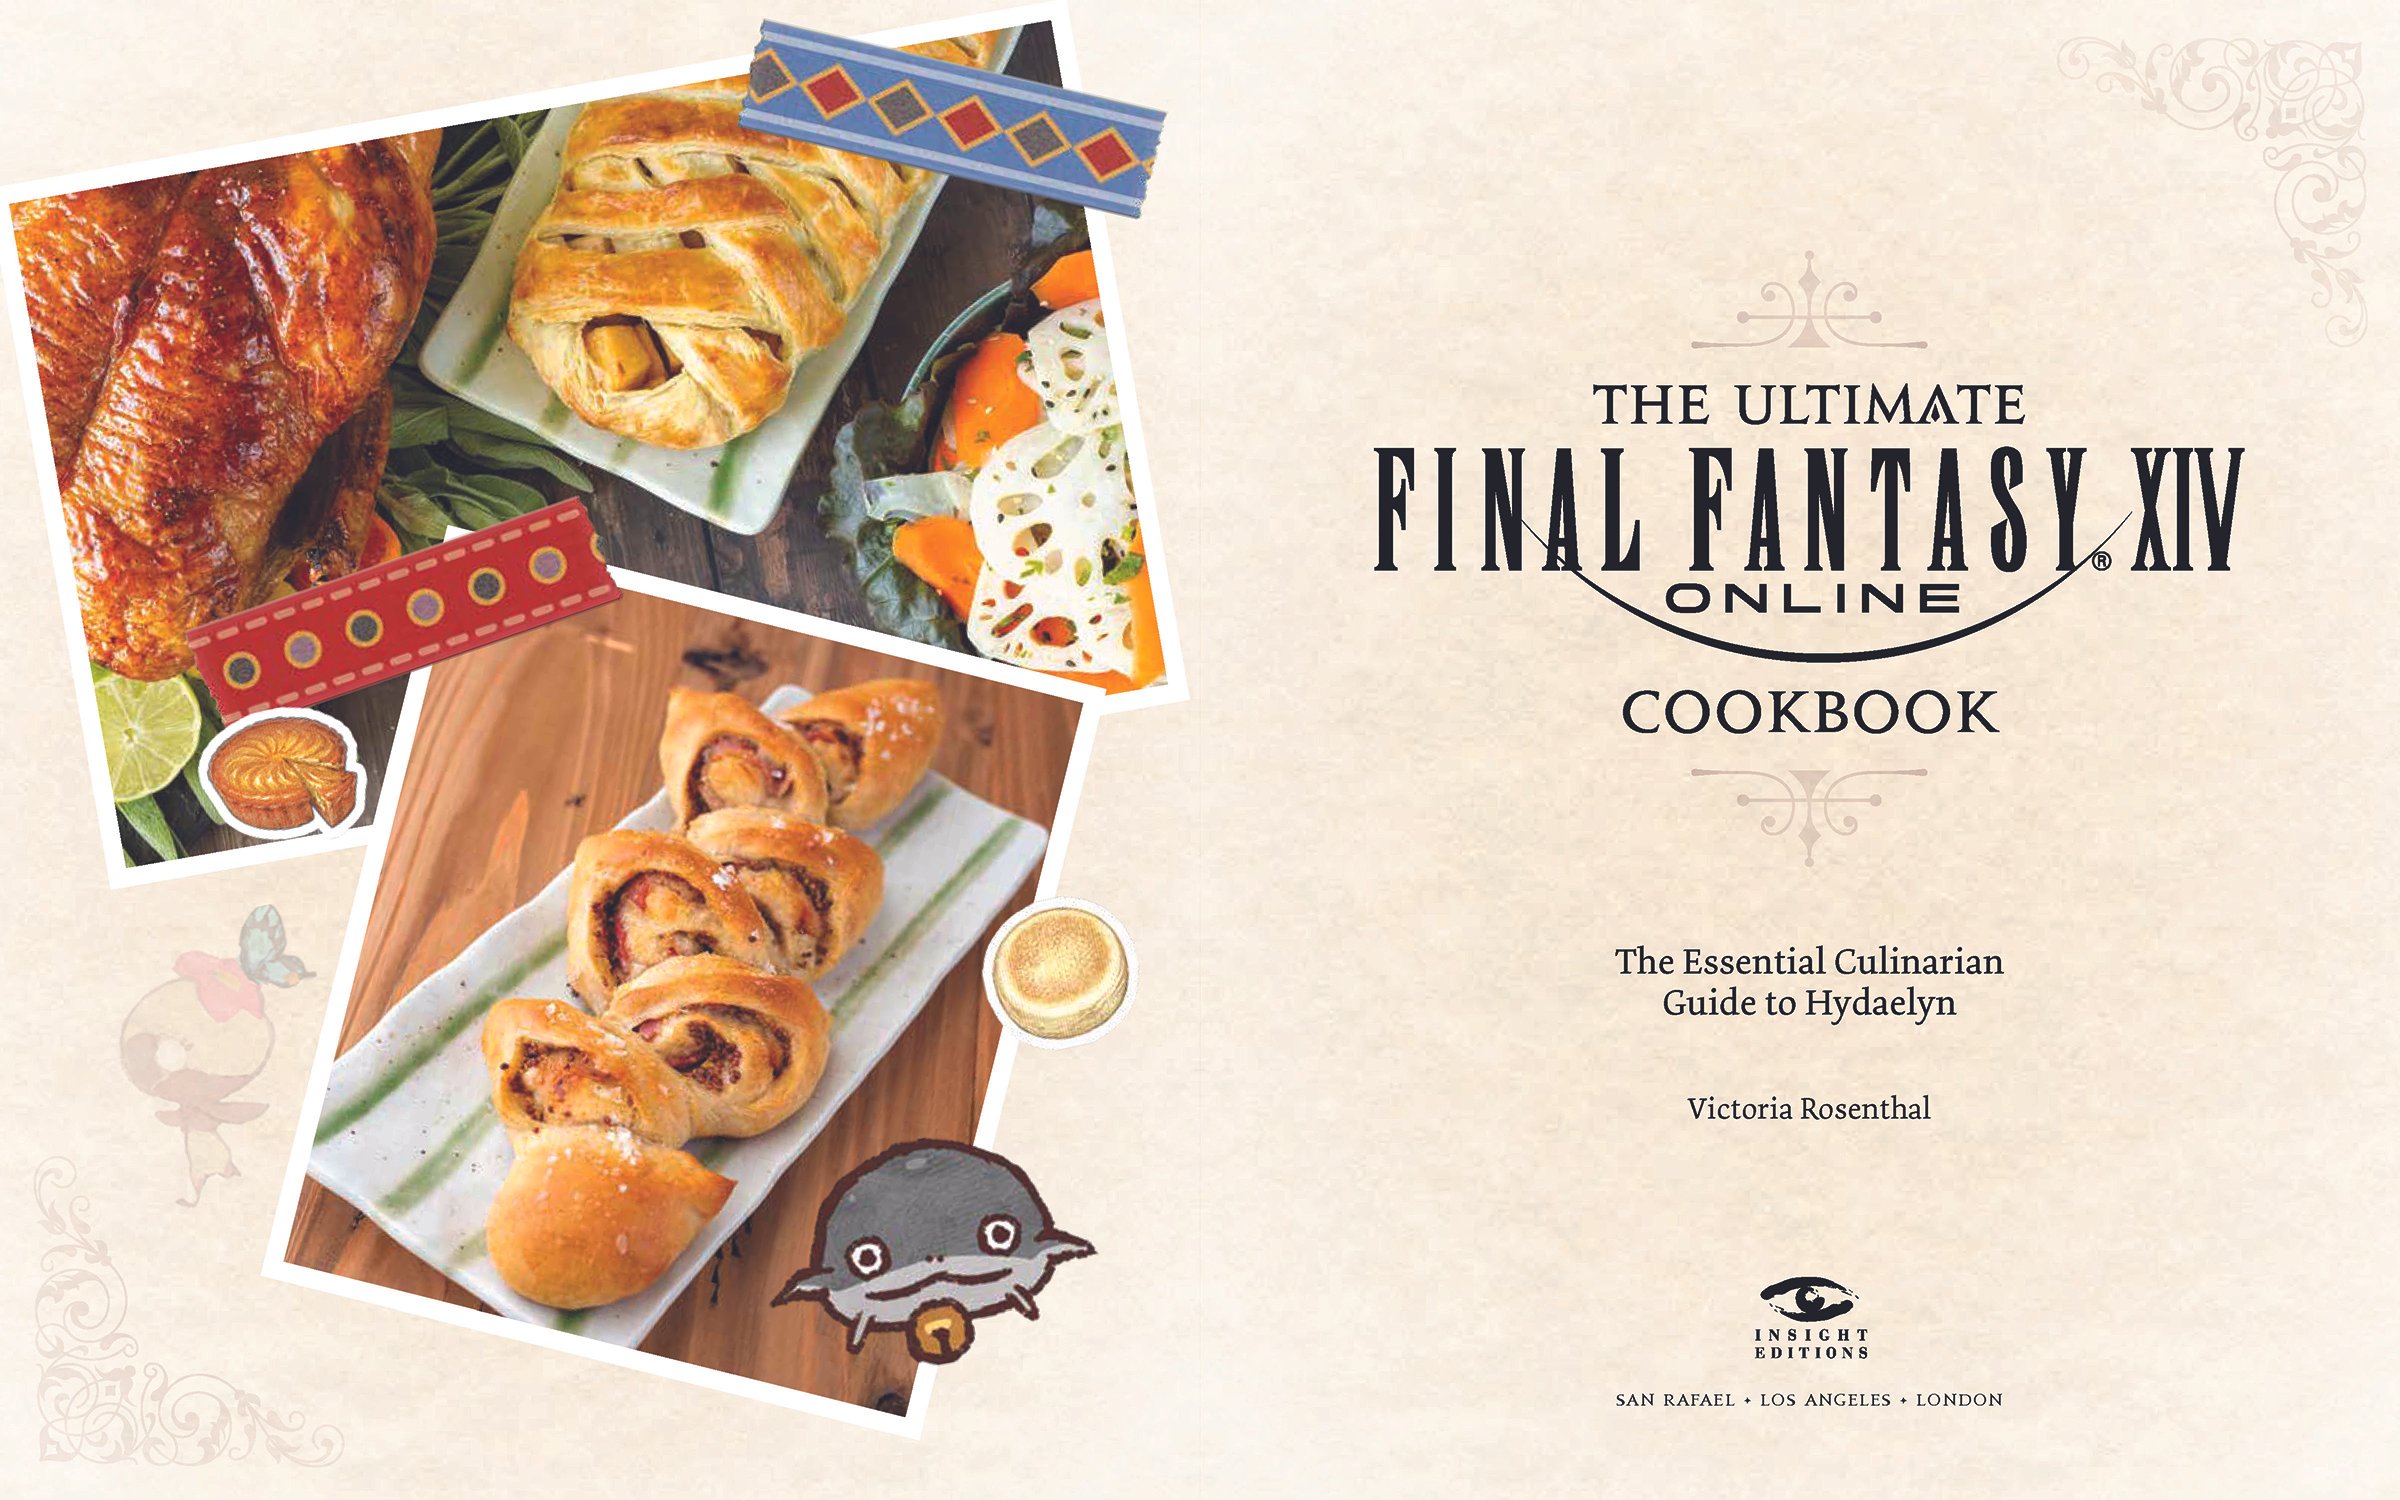 The Ultimate Final Fantasy XIV Cookbook Full Title Spread